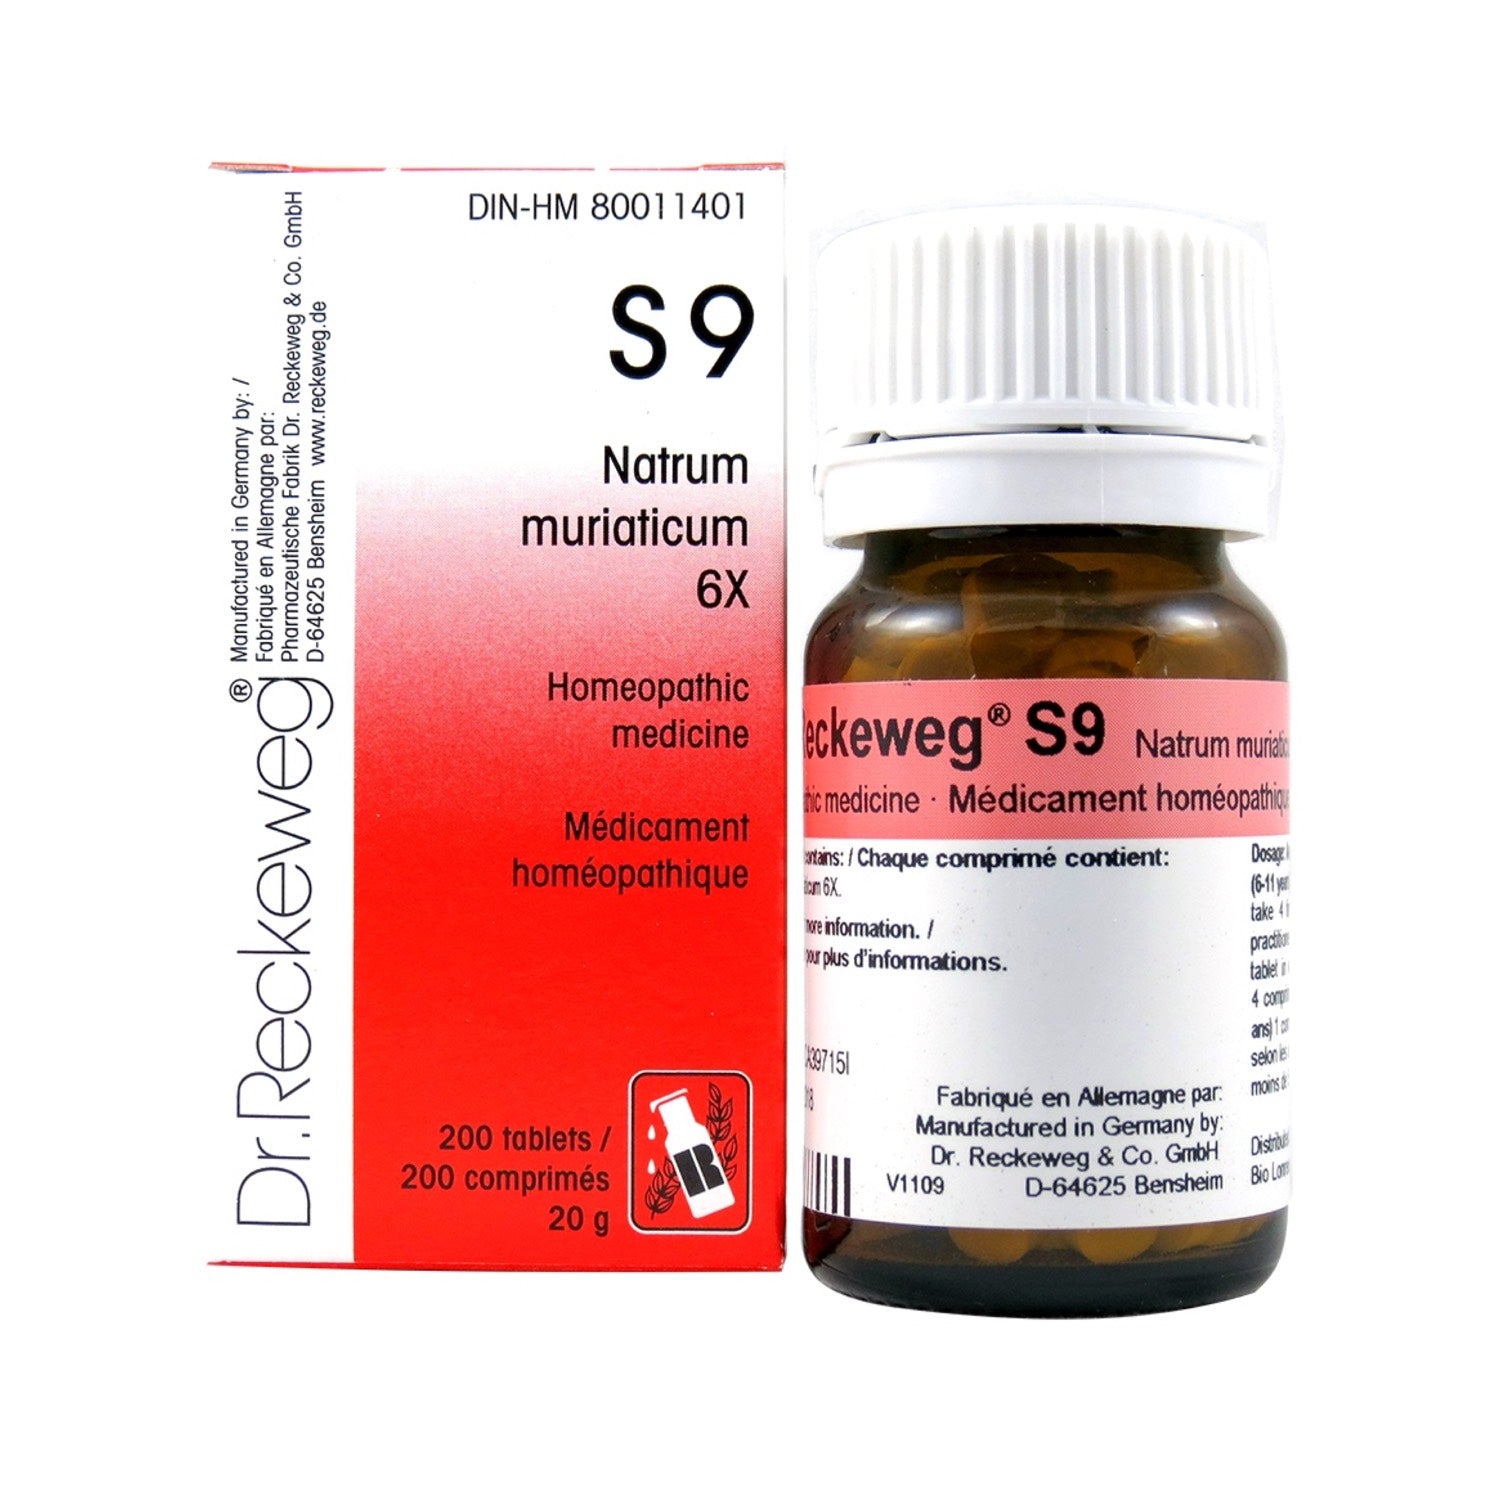 S9 Natrum muriaticum Homeopathic medicine Schuessler salt 6X 200 tablets (20 g)